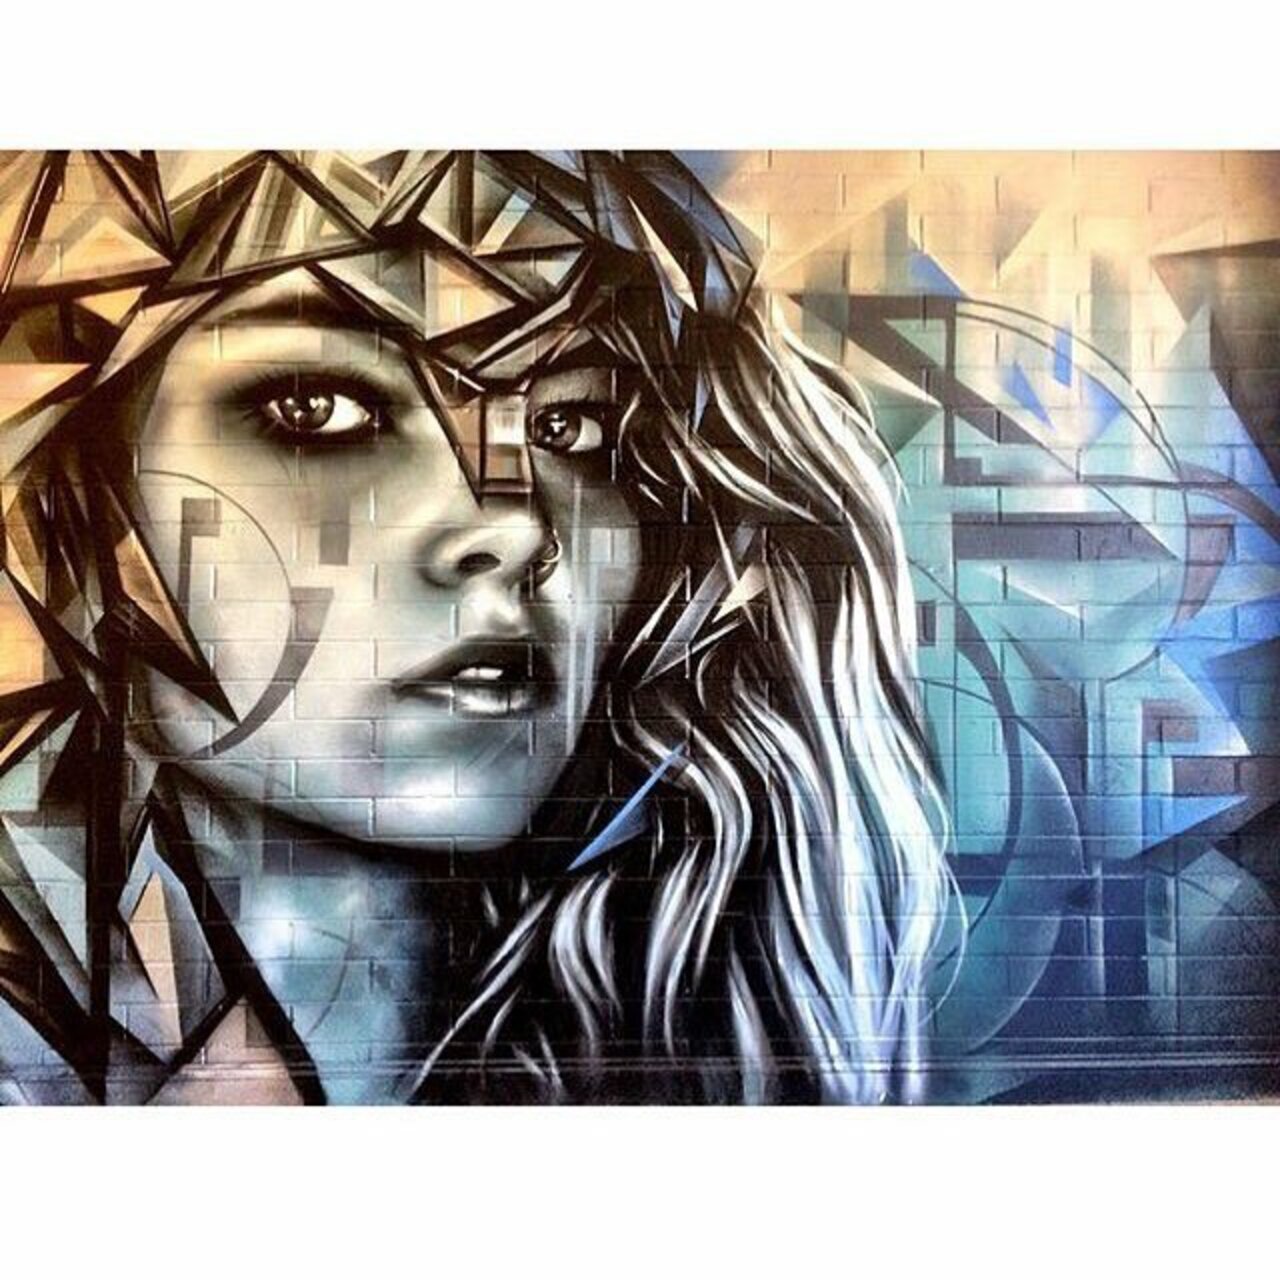 #StreetArt by Christina Angelina and Ease One #MarinaDelRey #CA https://t.co/jvoWfaULYh